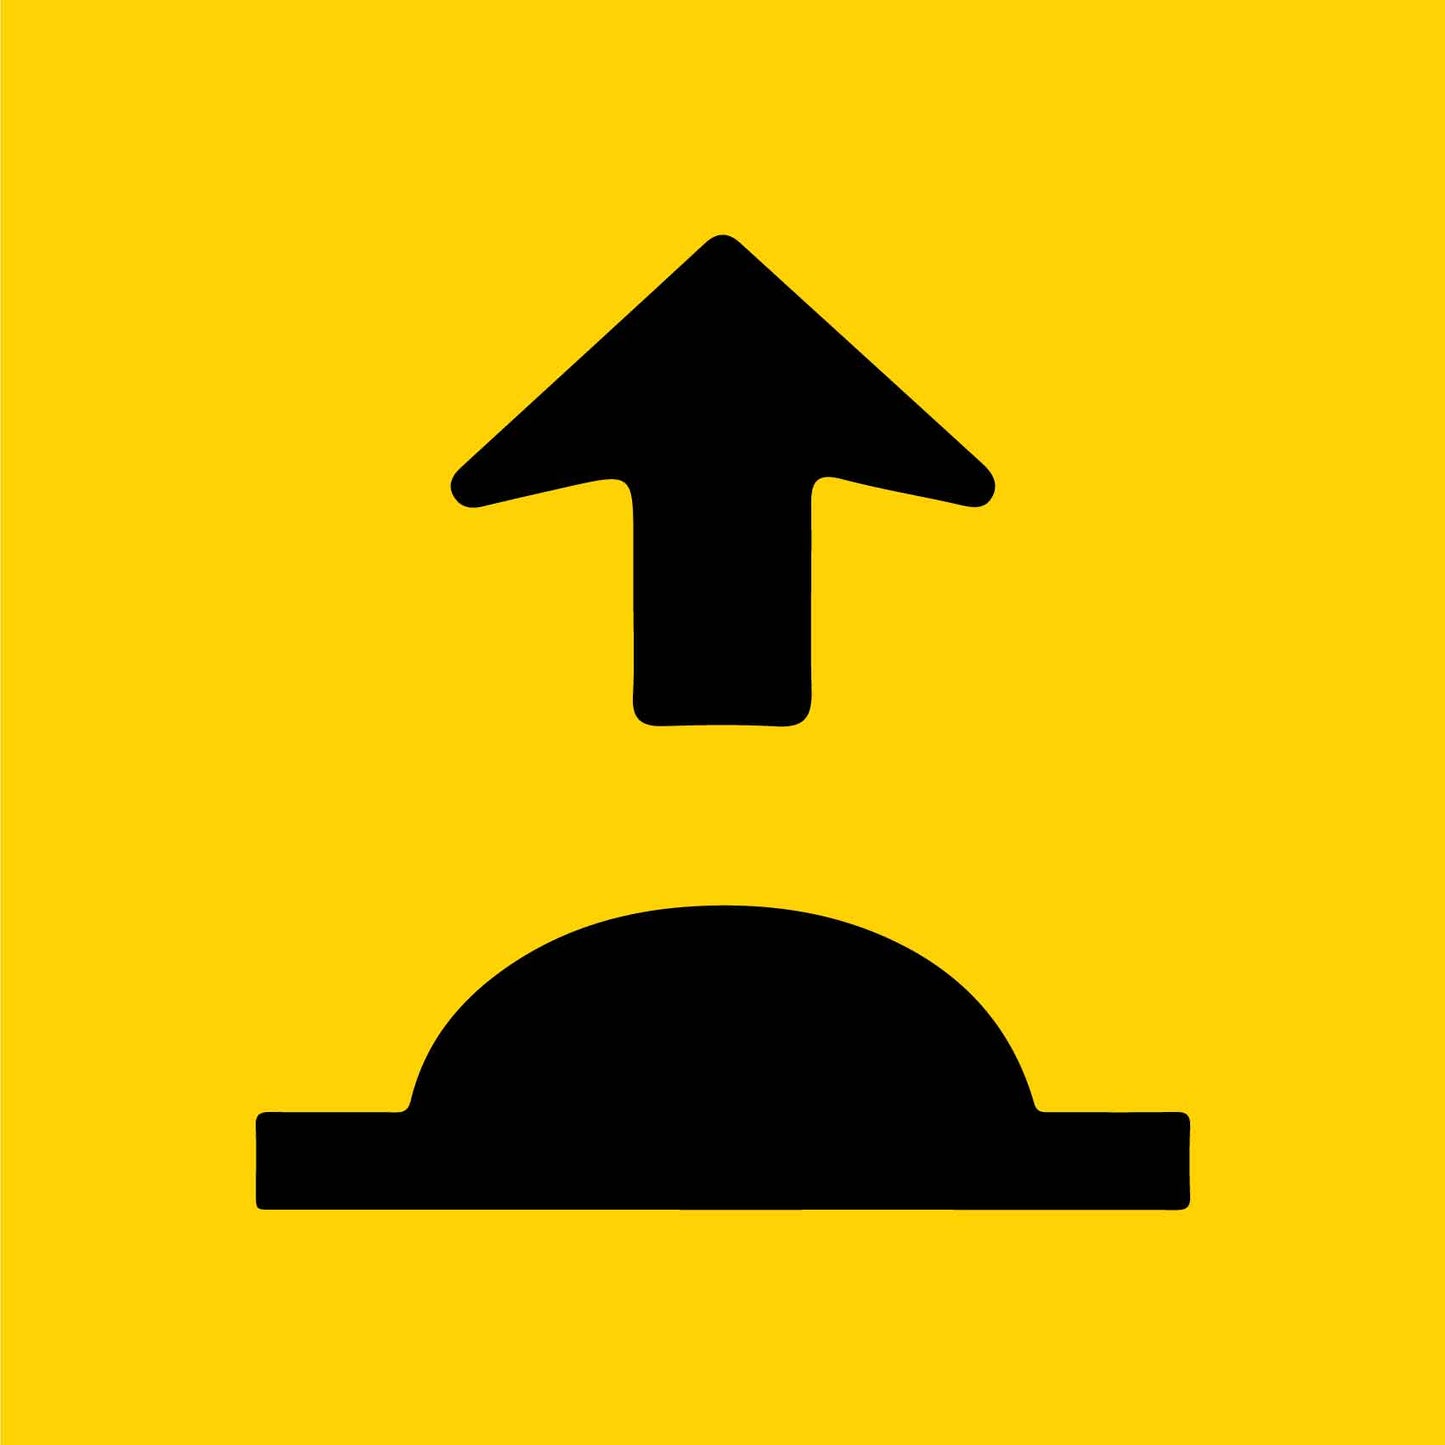 Speed Hump (Arrow Up) Multi Message Traffic Sign